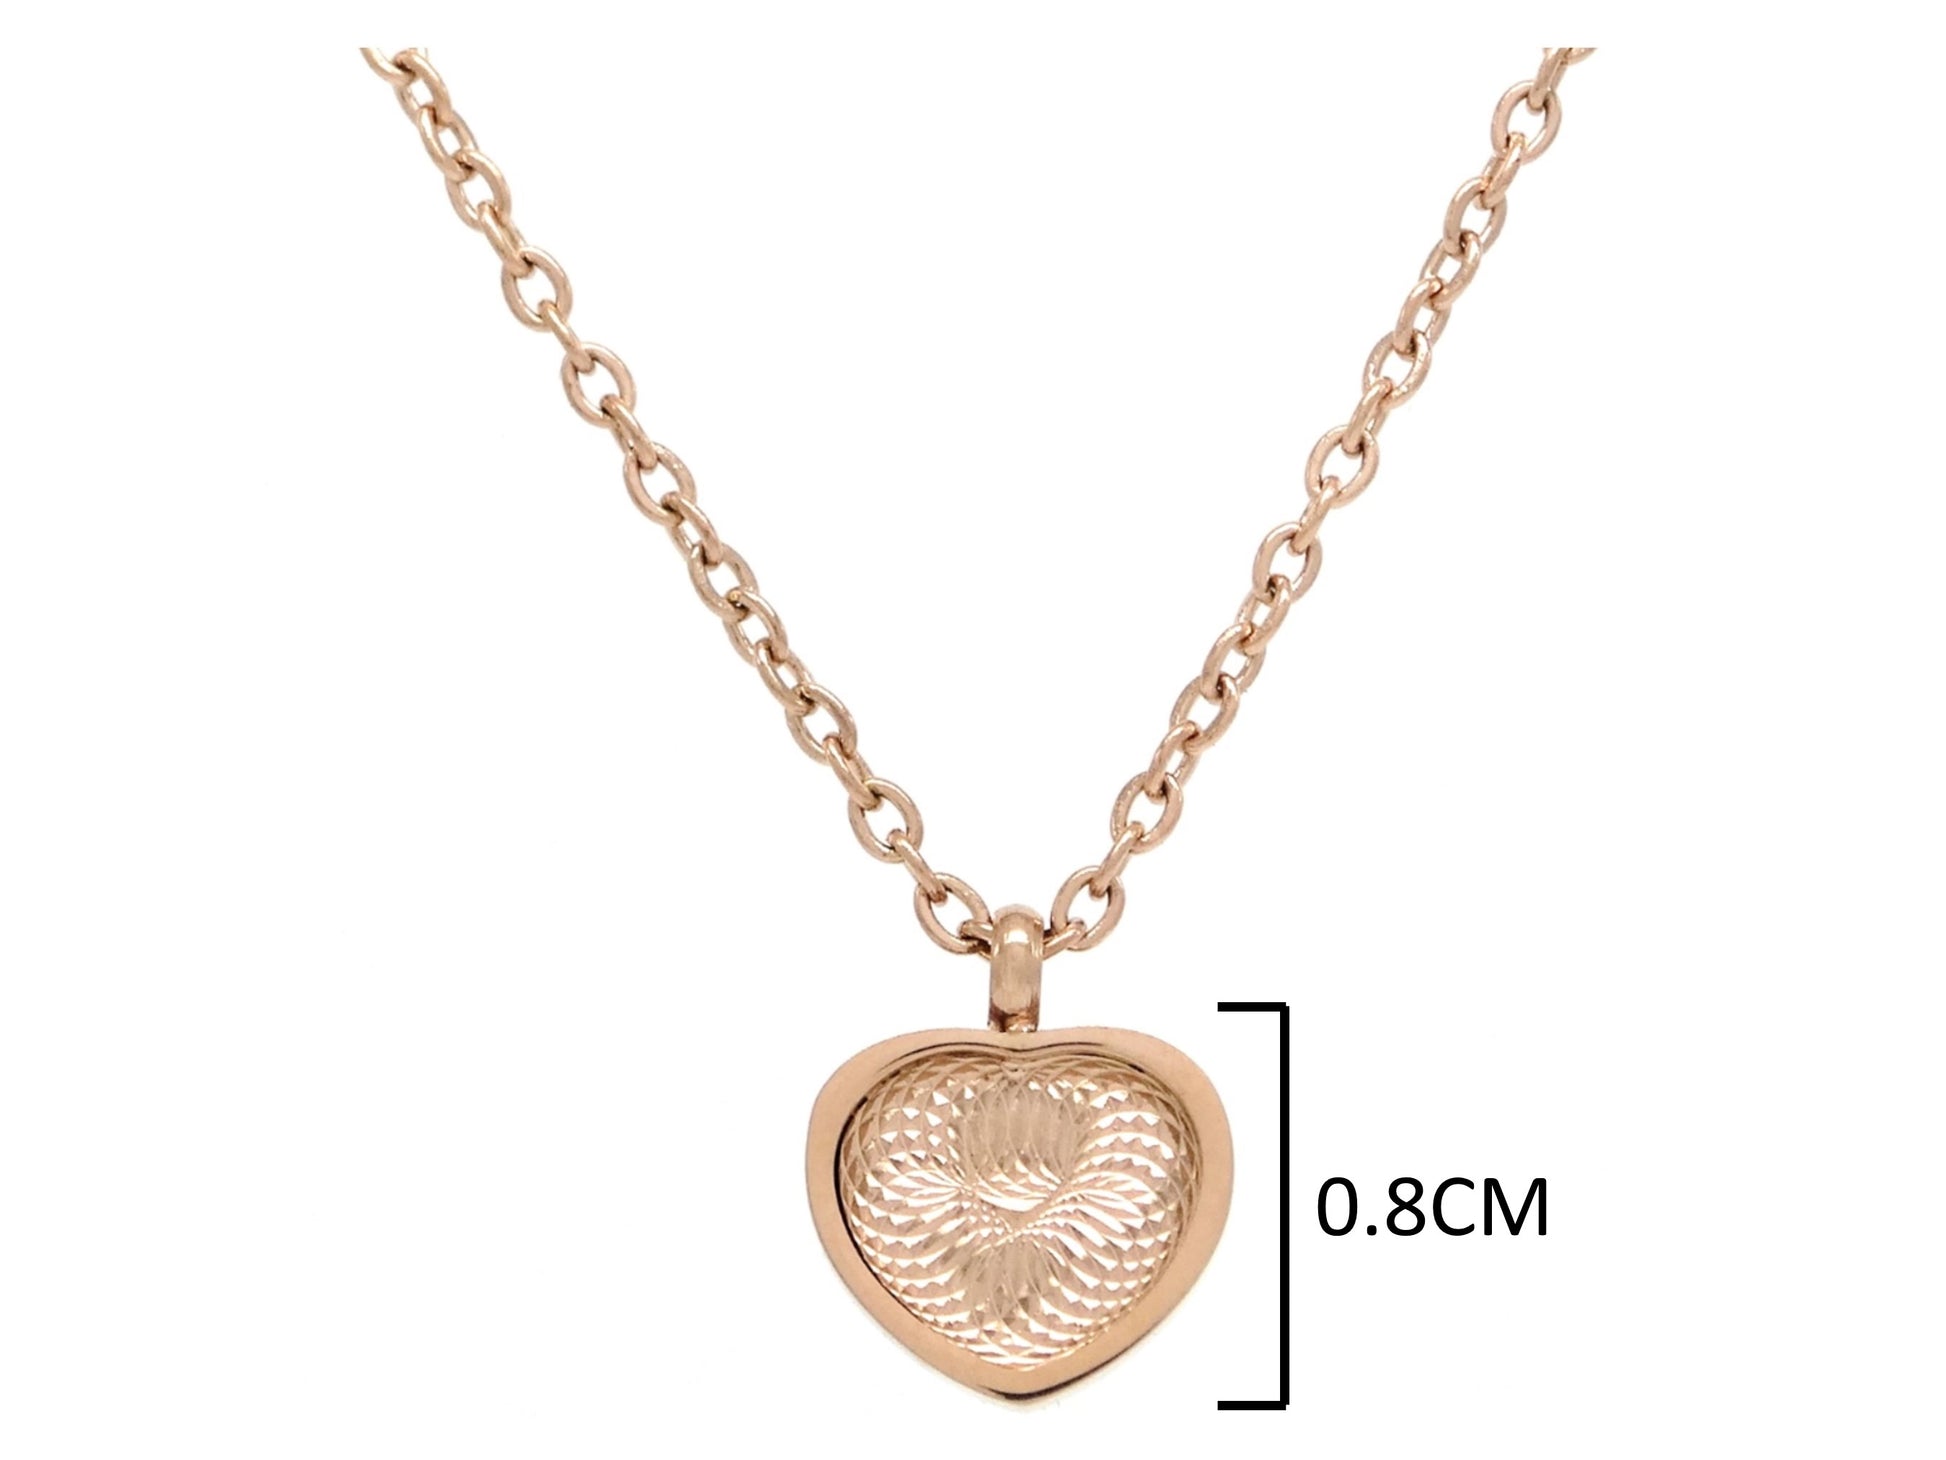 Rose gold choker heart necklace MEASUREMENT